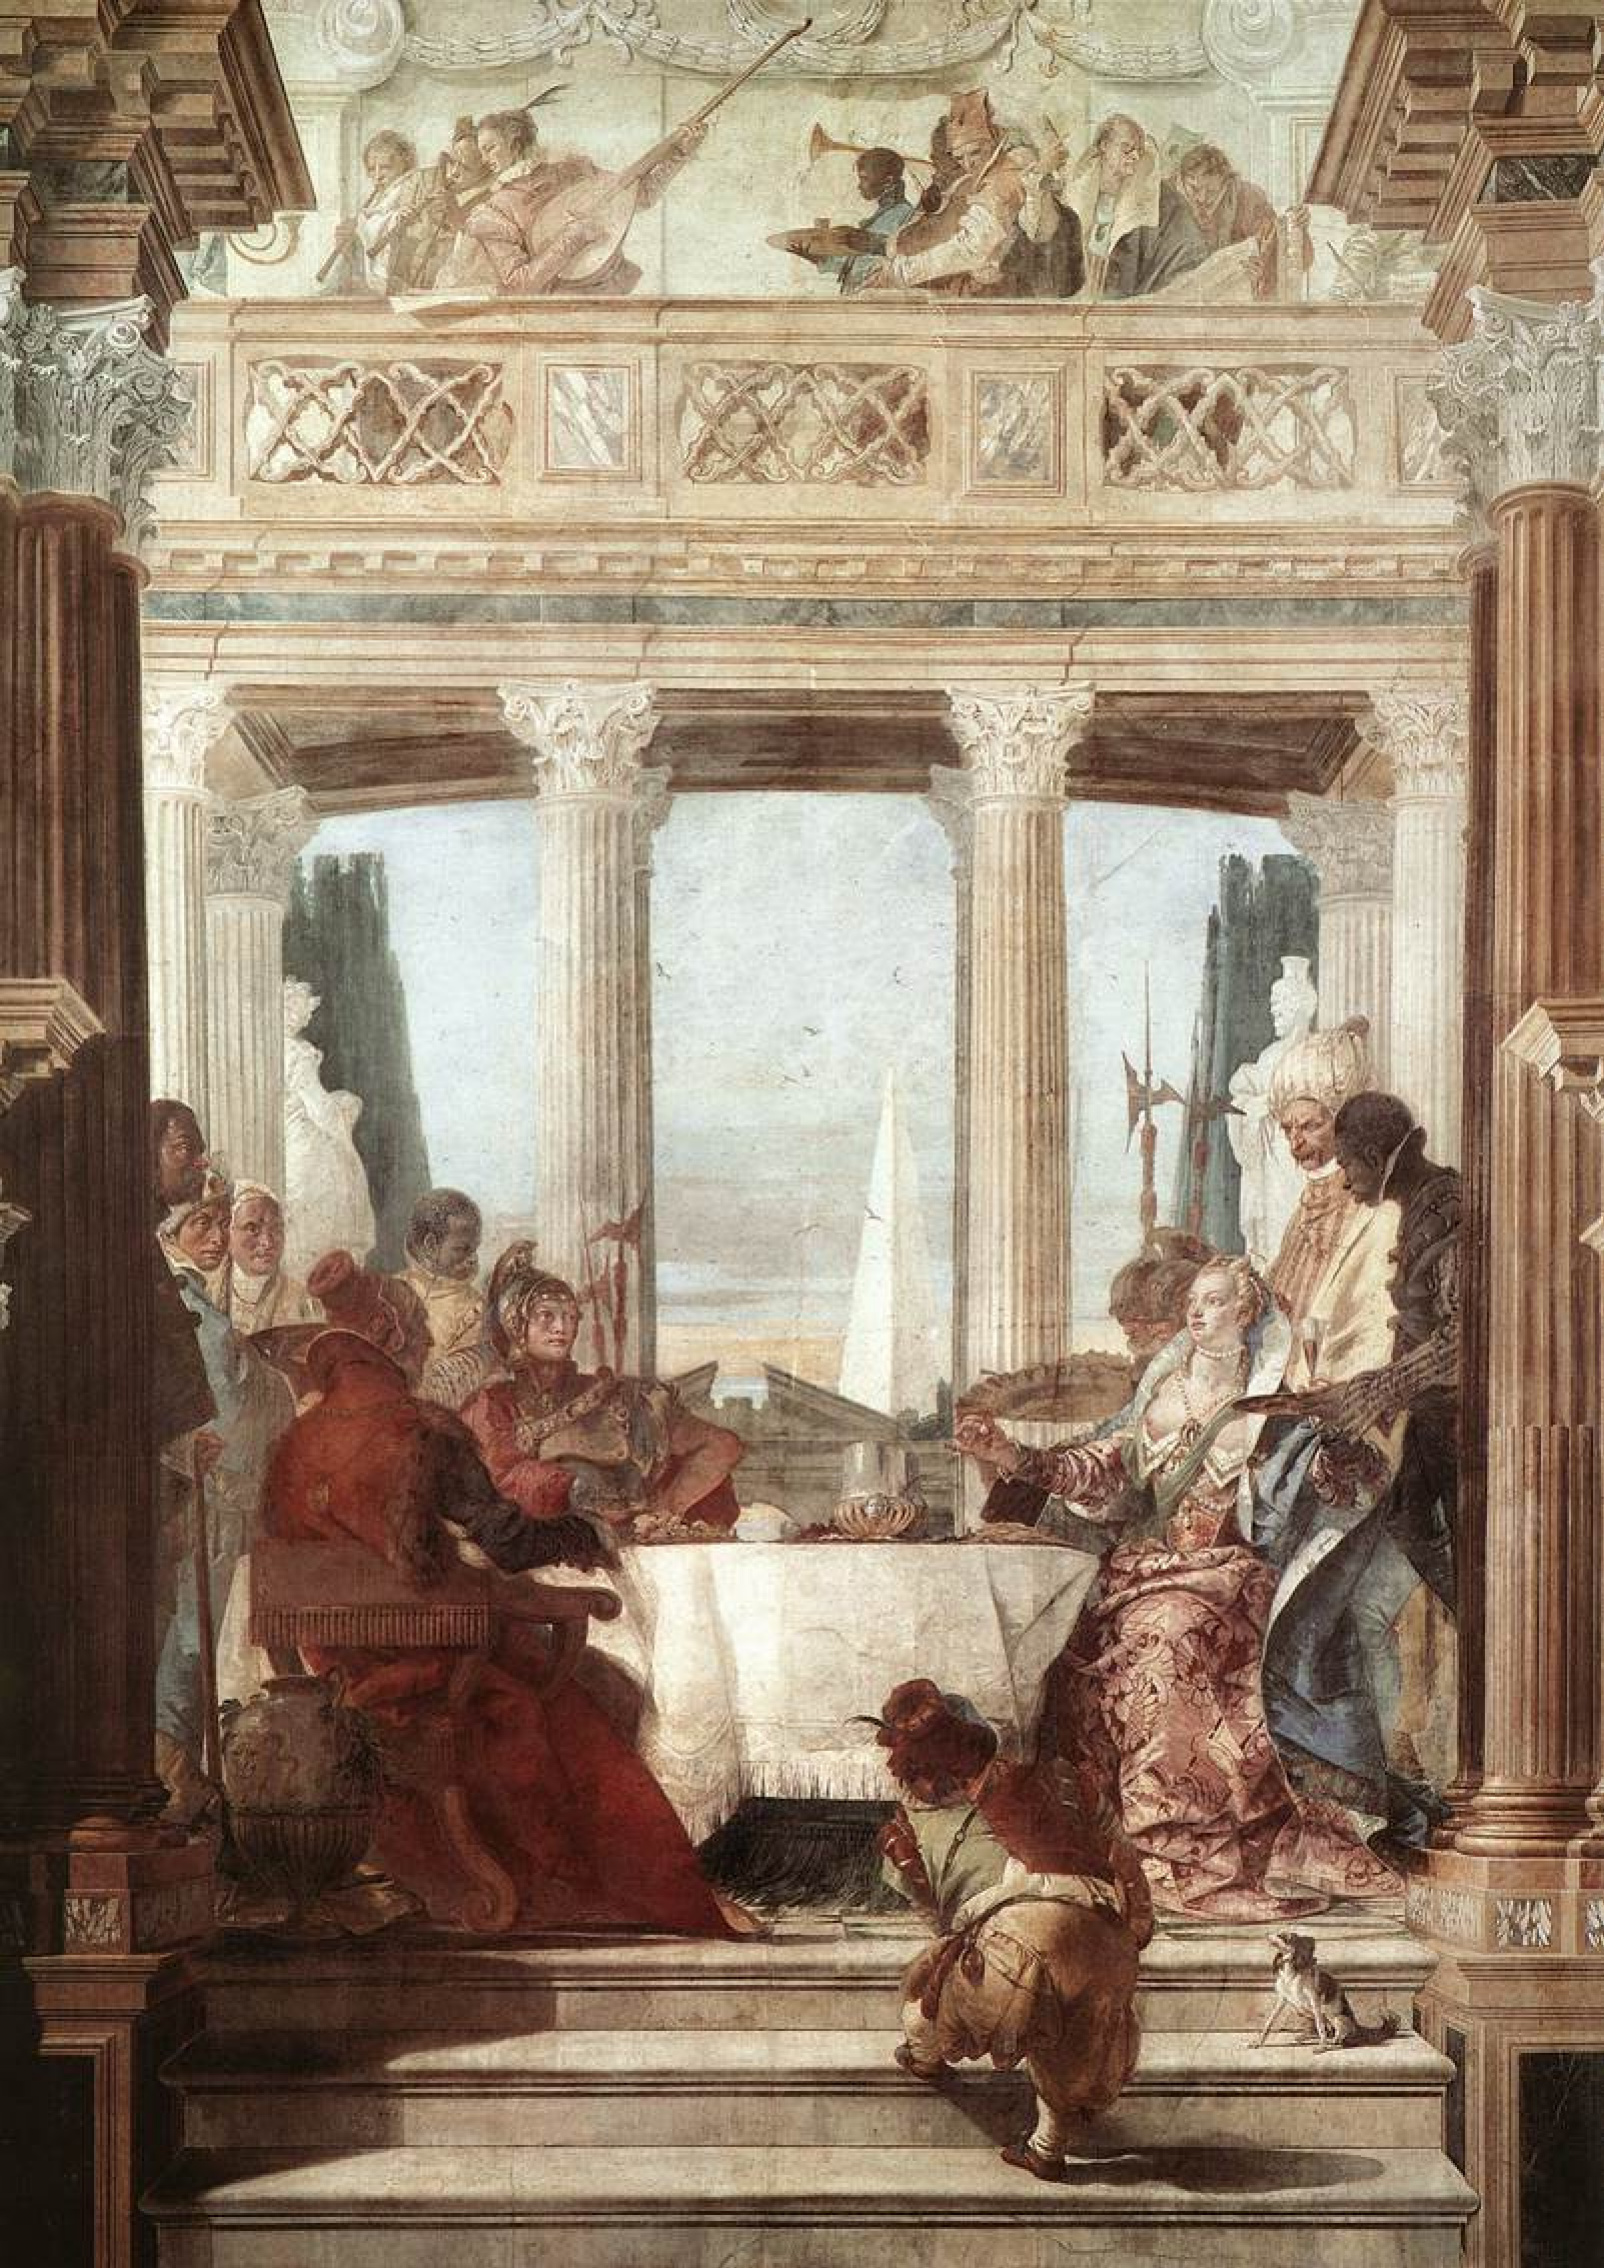 Giovanni Battista Tiepolo, Banquet of Cleopatra, 1746-1747, Palazzo Labia, Venice, Italy.